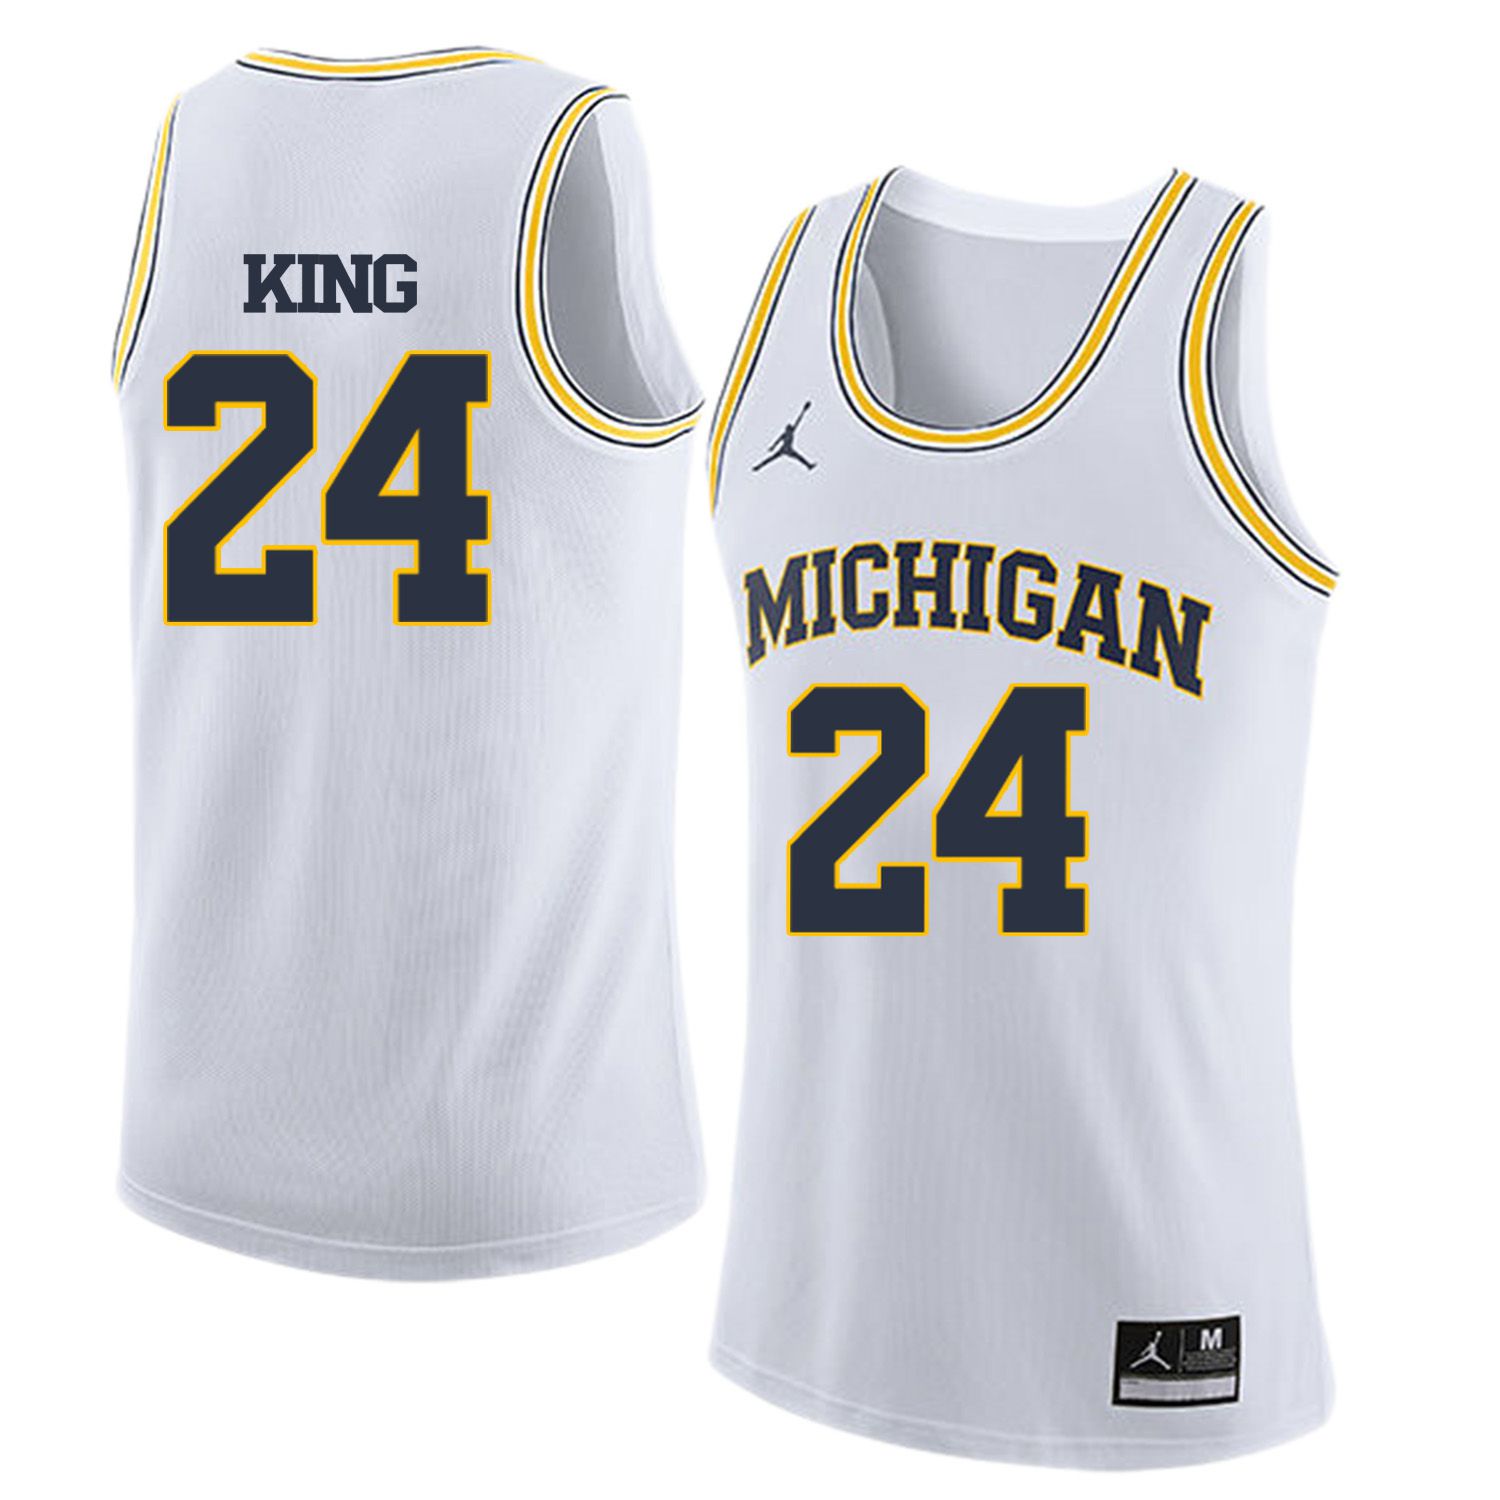 Men Jordan University of Michigan Basketball White 24 King Customized NCAA Jerseys